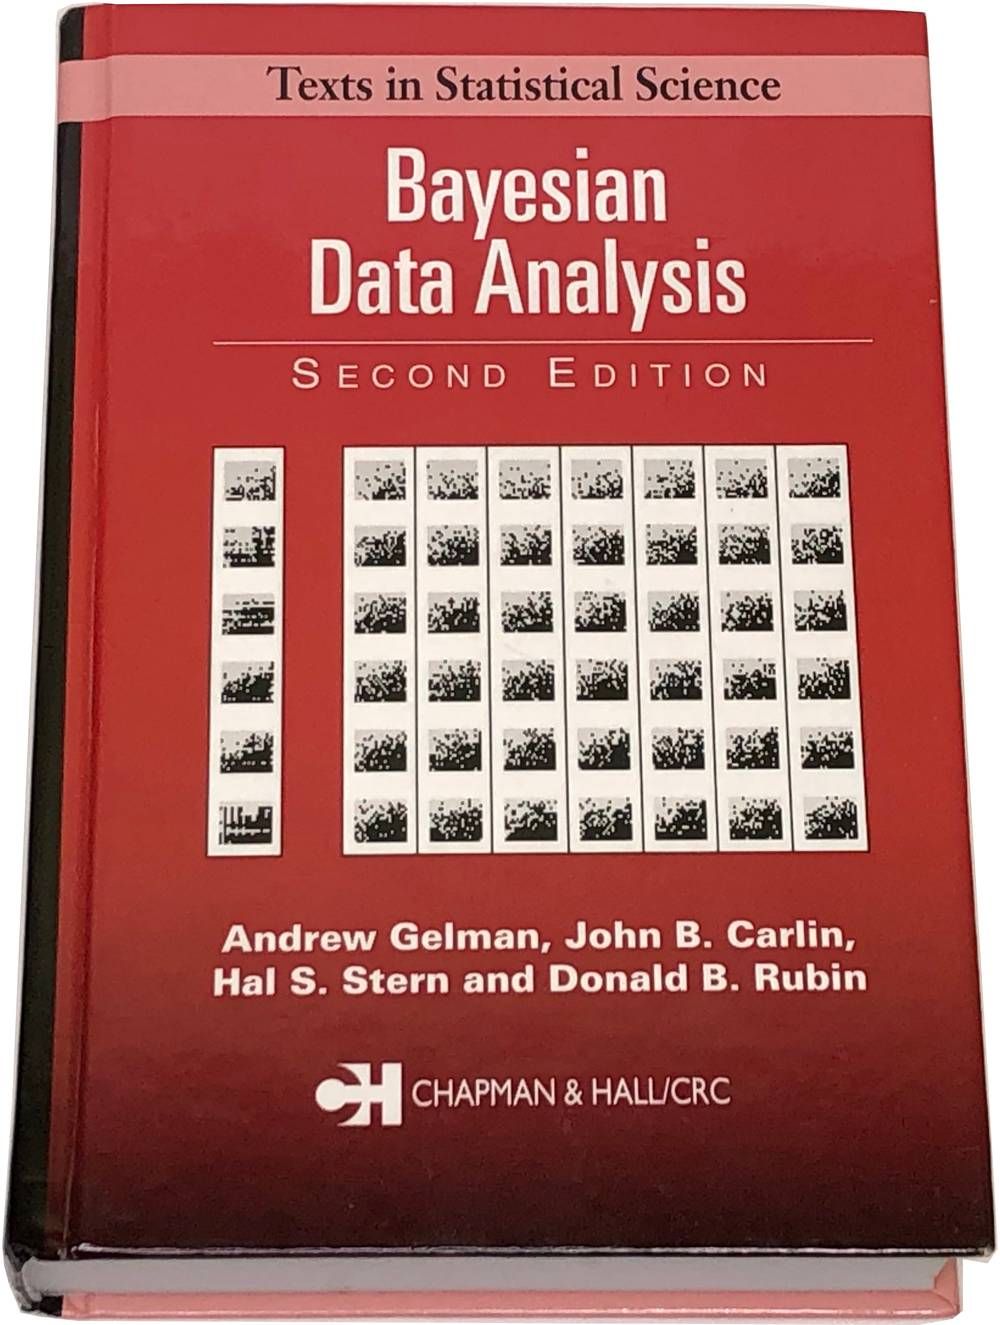 Book image of Bayesian Data Analysis.